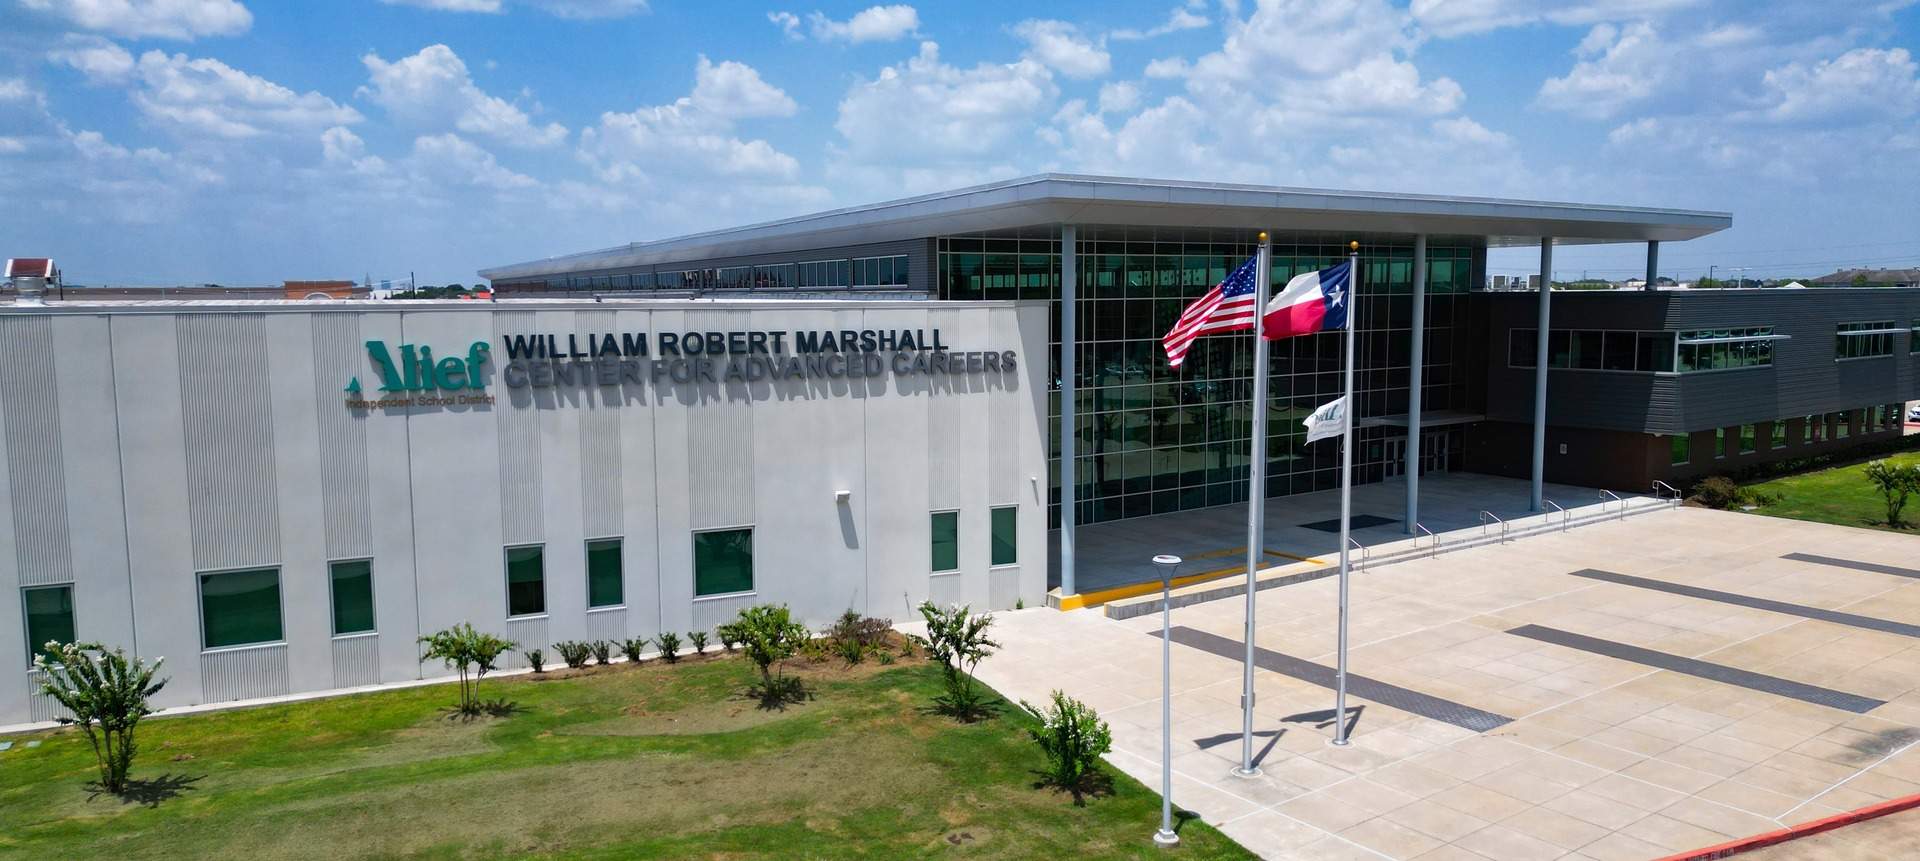 William Robert Marshall Center for Advanced Careers